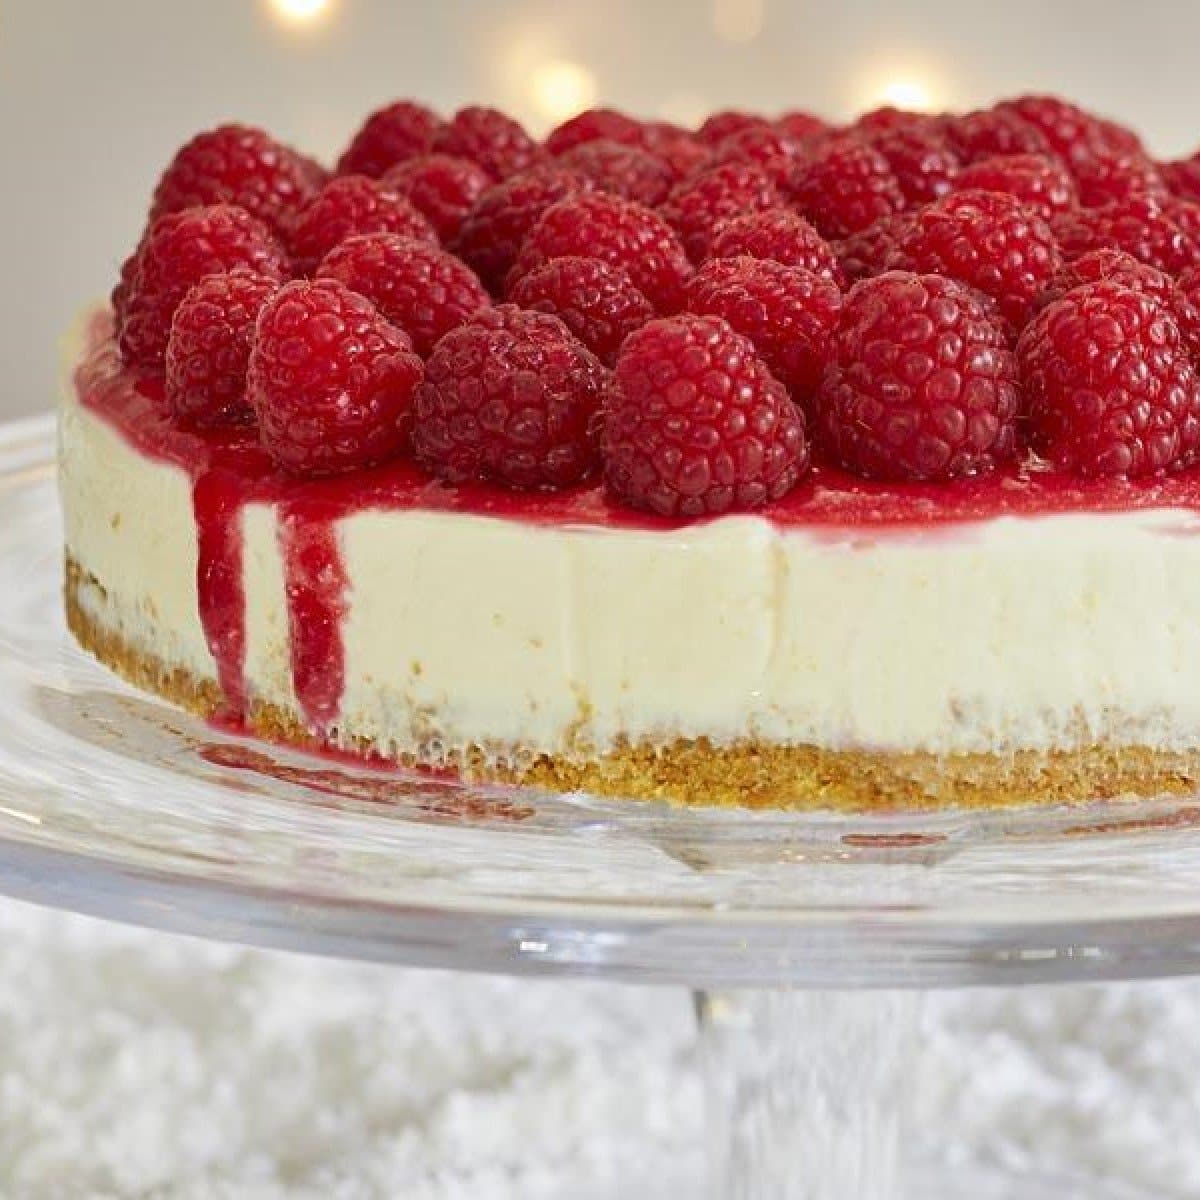 Philadelphia Cheesecake with Raspberries Recipe